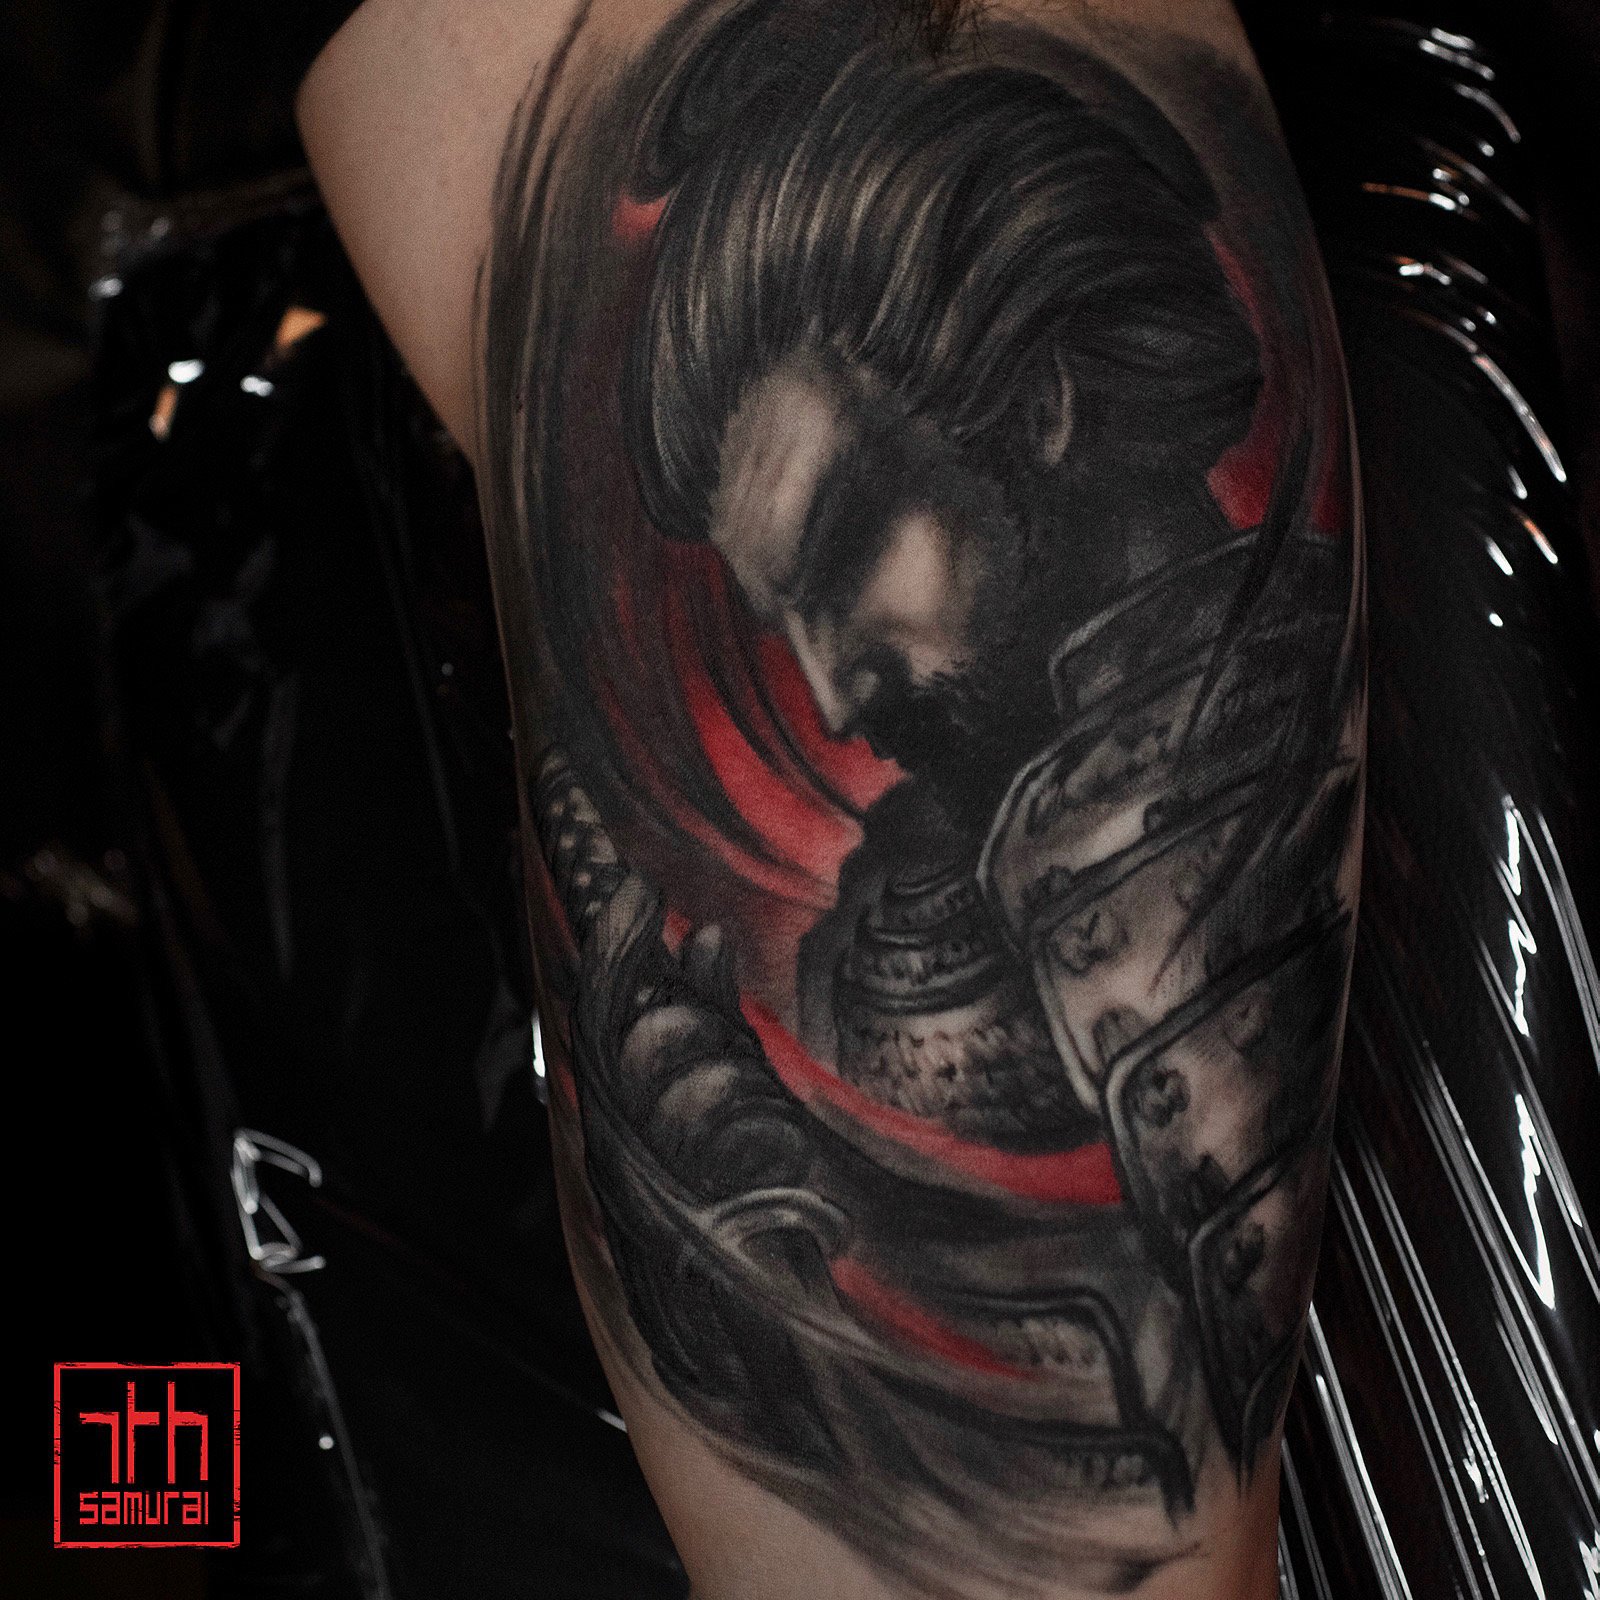 japanese Samurai  Men's bicep tattoo with red highlights  Kai at 7th Samurai. YEG Edmonton, Alberta, Canada